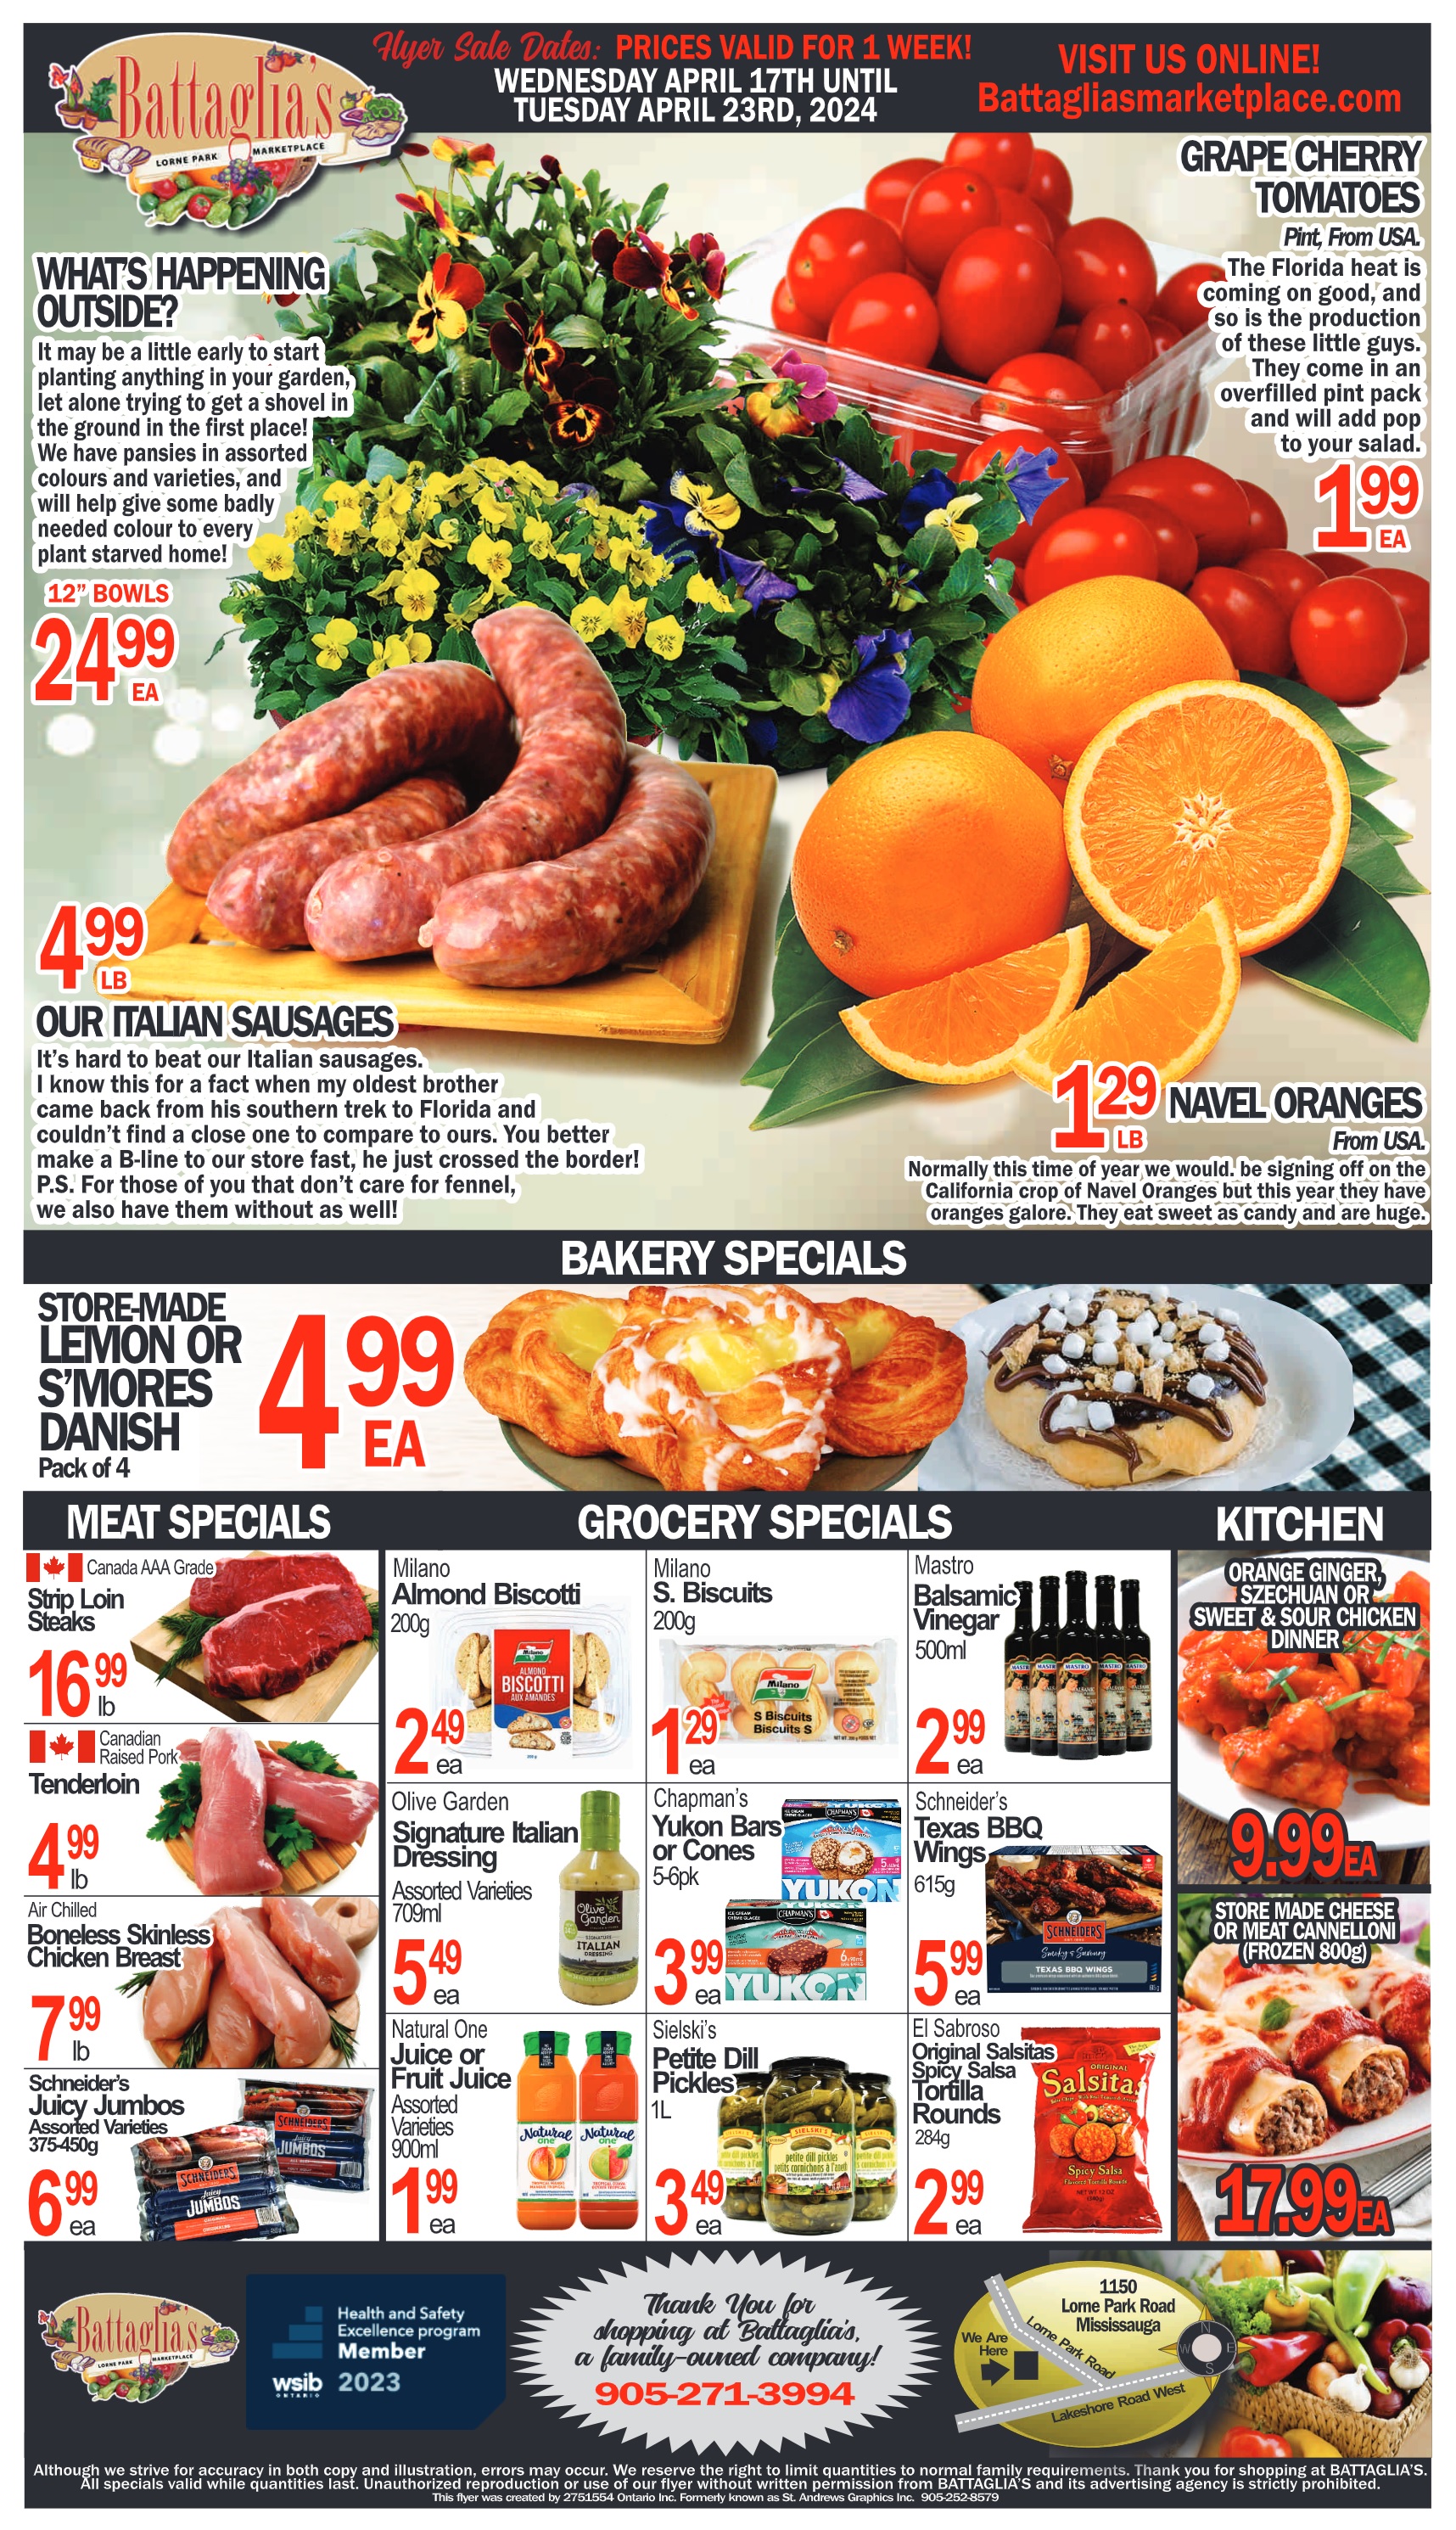 Battaglia’s Marketplace - Weekly Flyer Specials